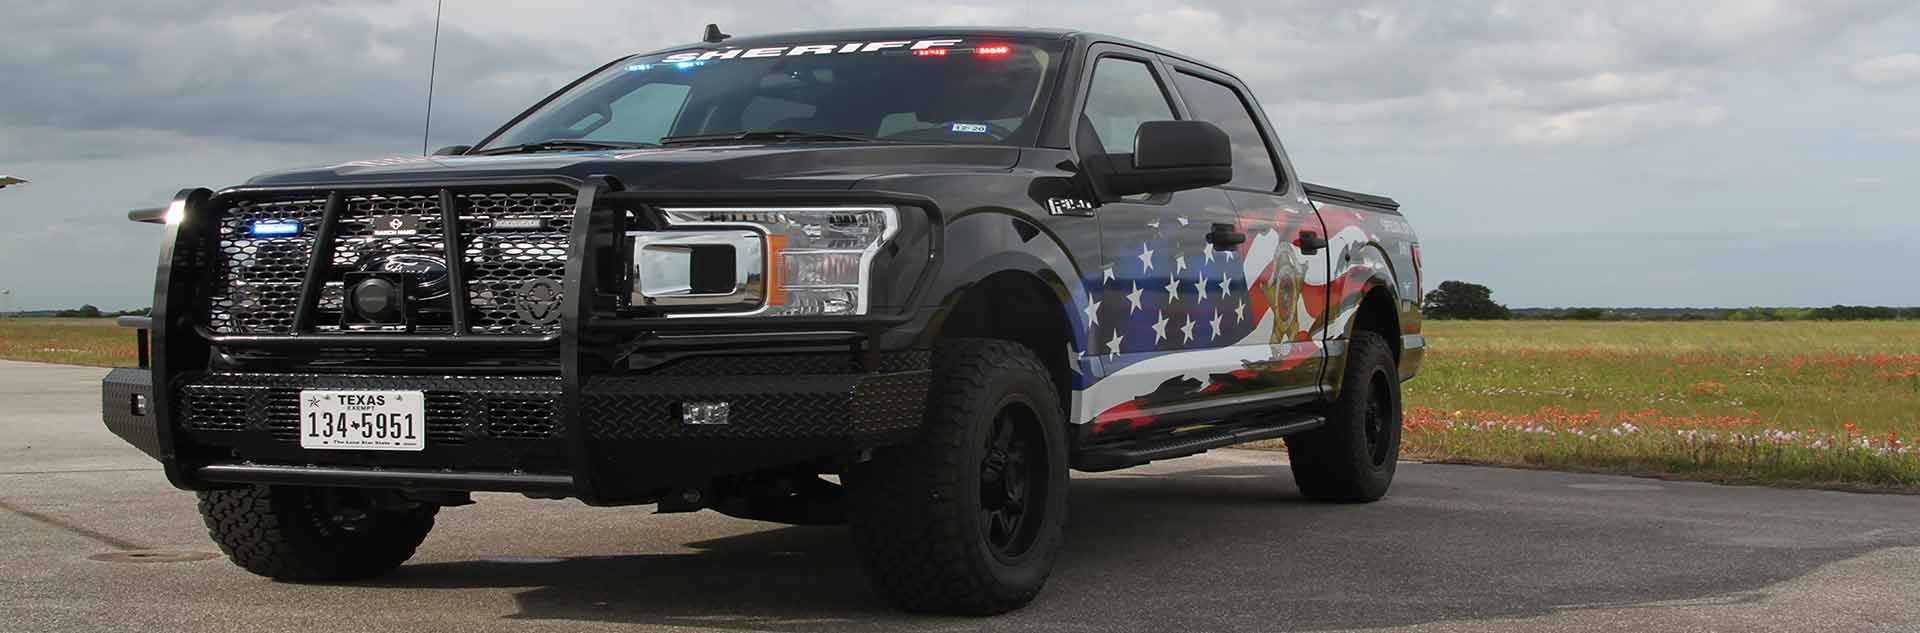 Sheriff Truck